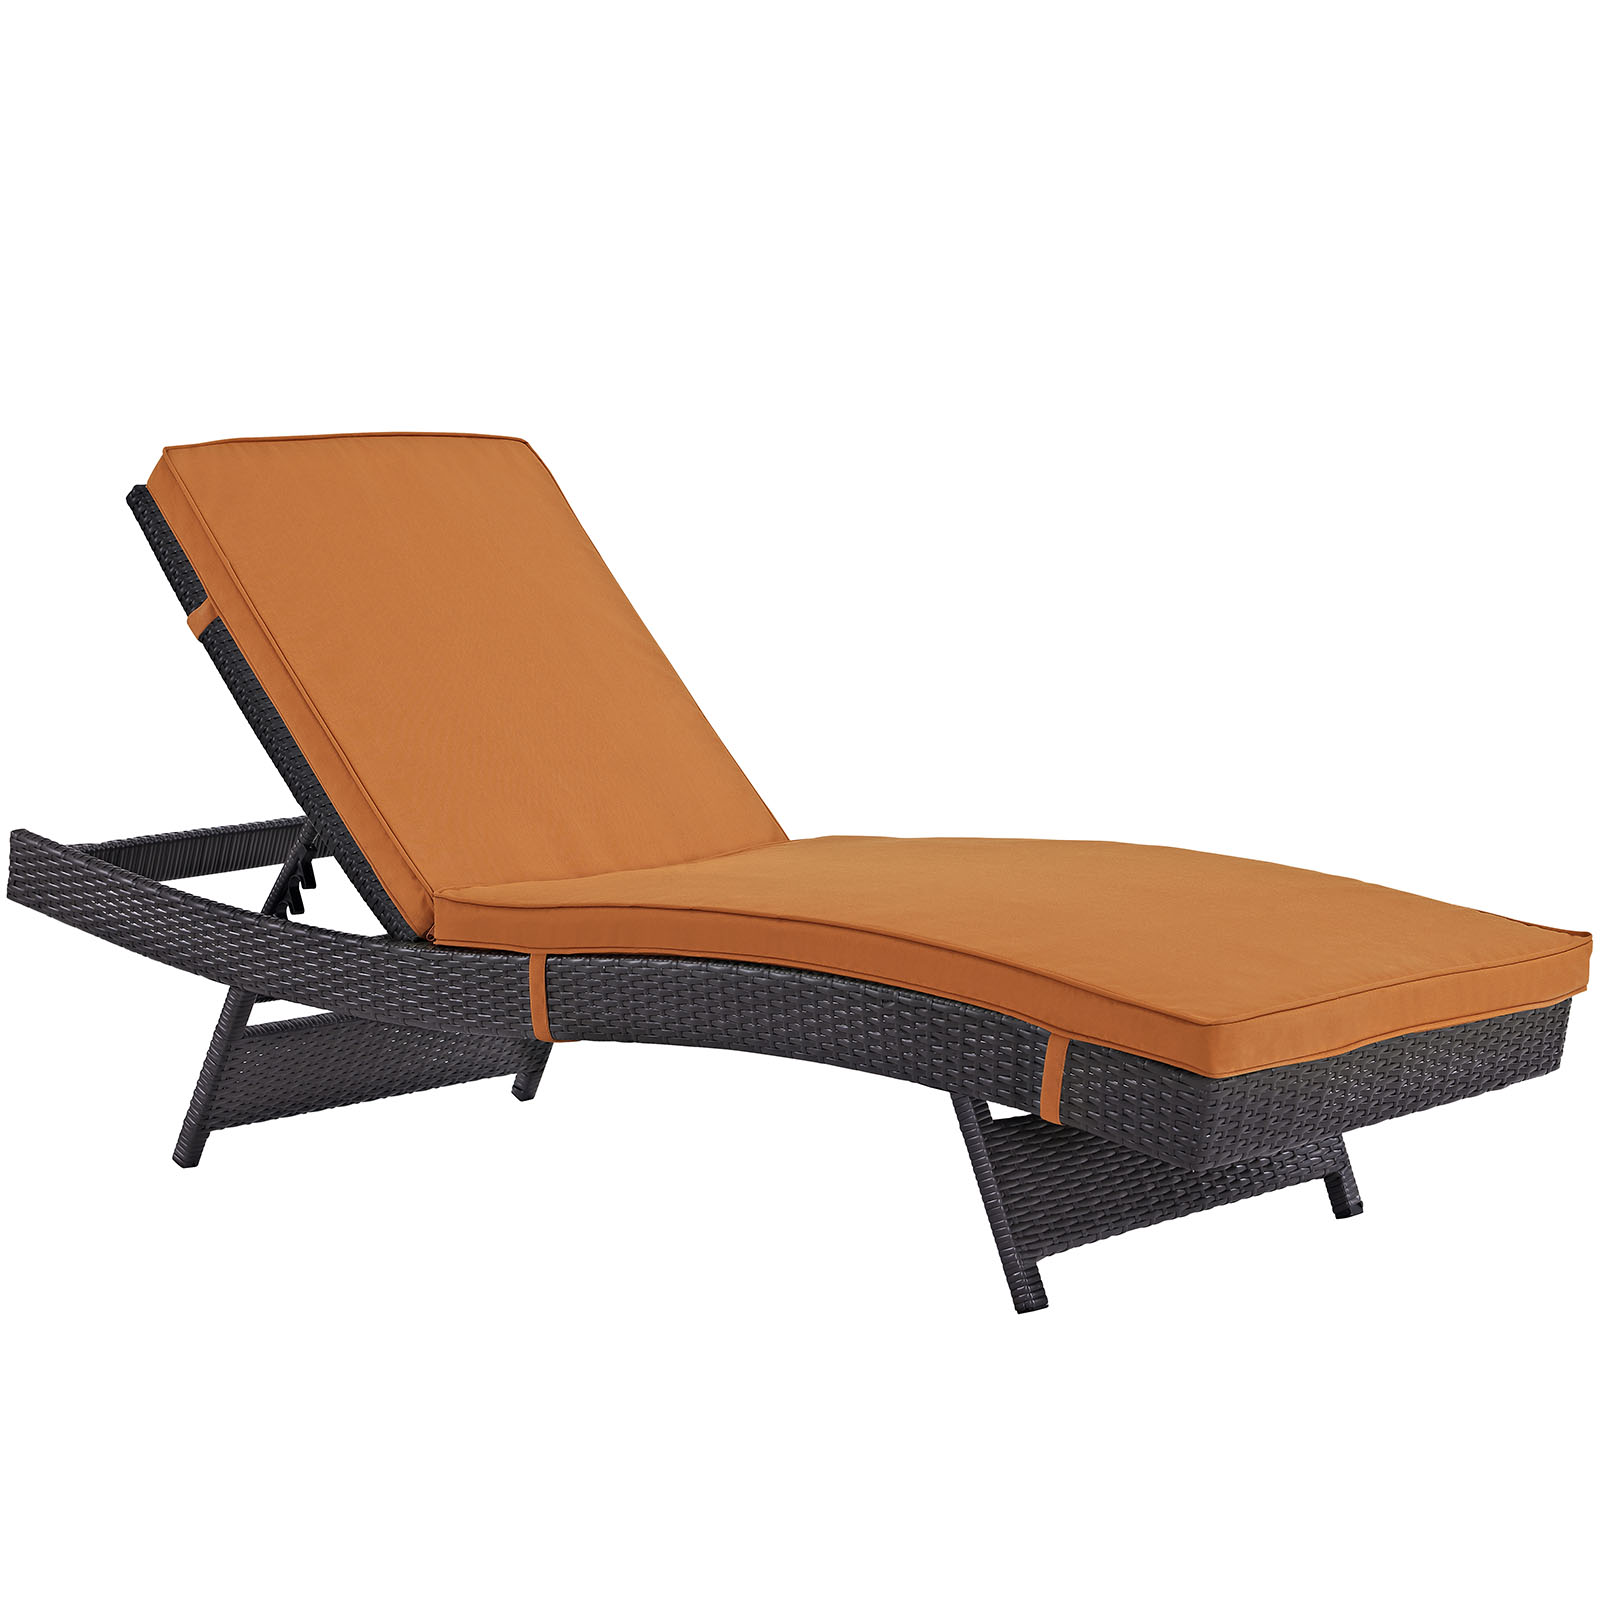 Modway Convene Chaise Outdoor Patio Set of 6 in Espresso Orange - image 3 of 5